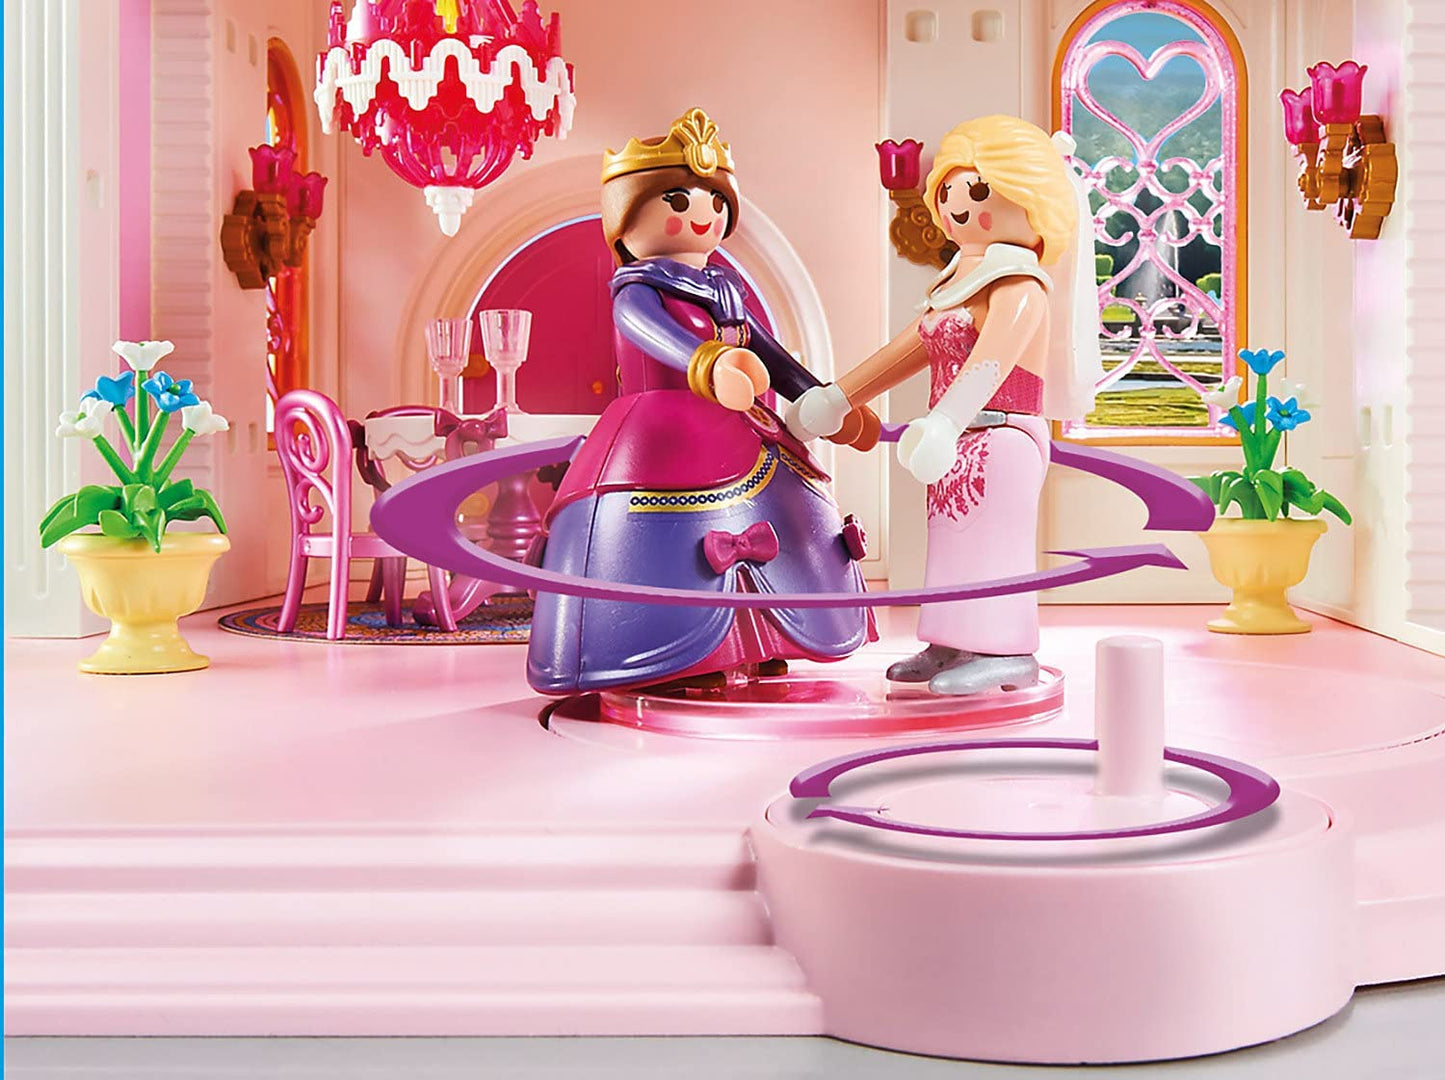 PLAYMOBIL Large Princess Castle